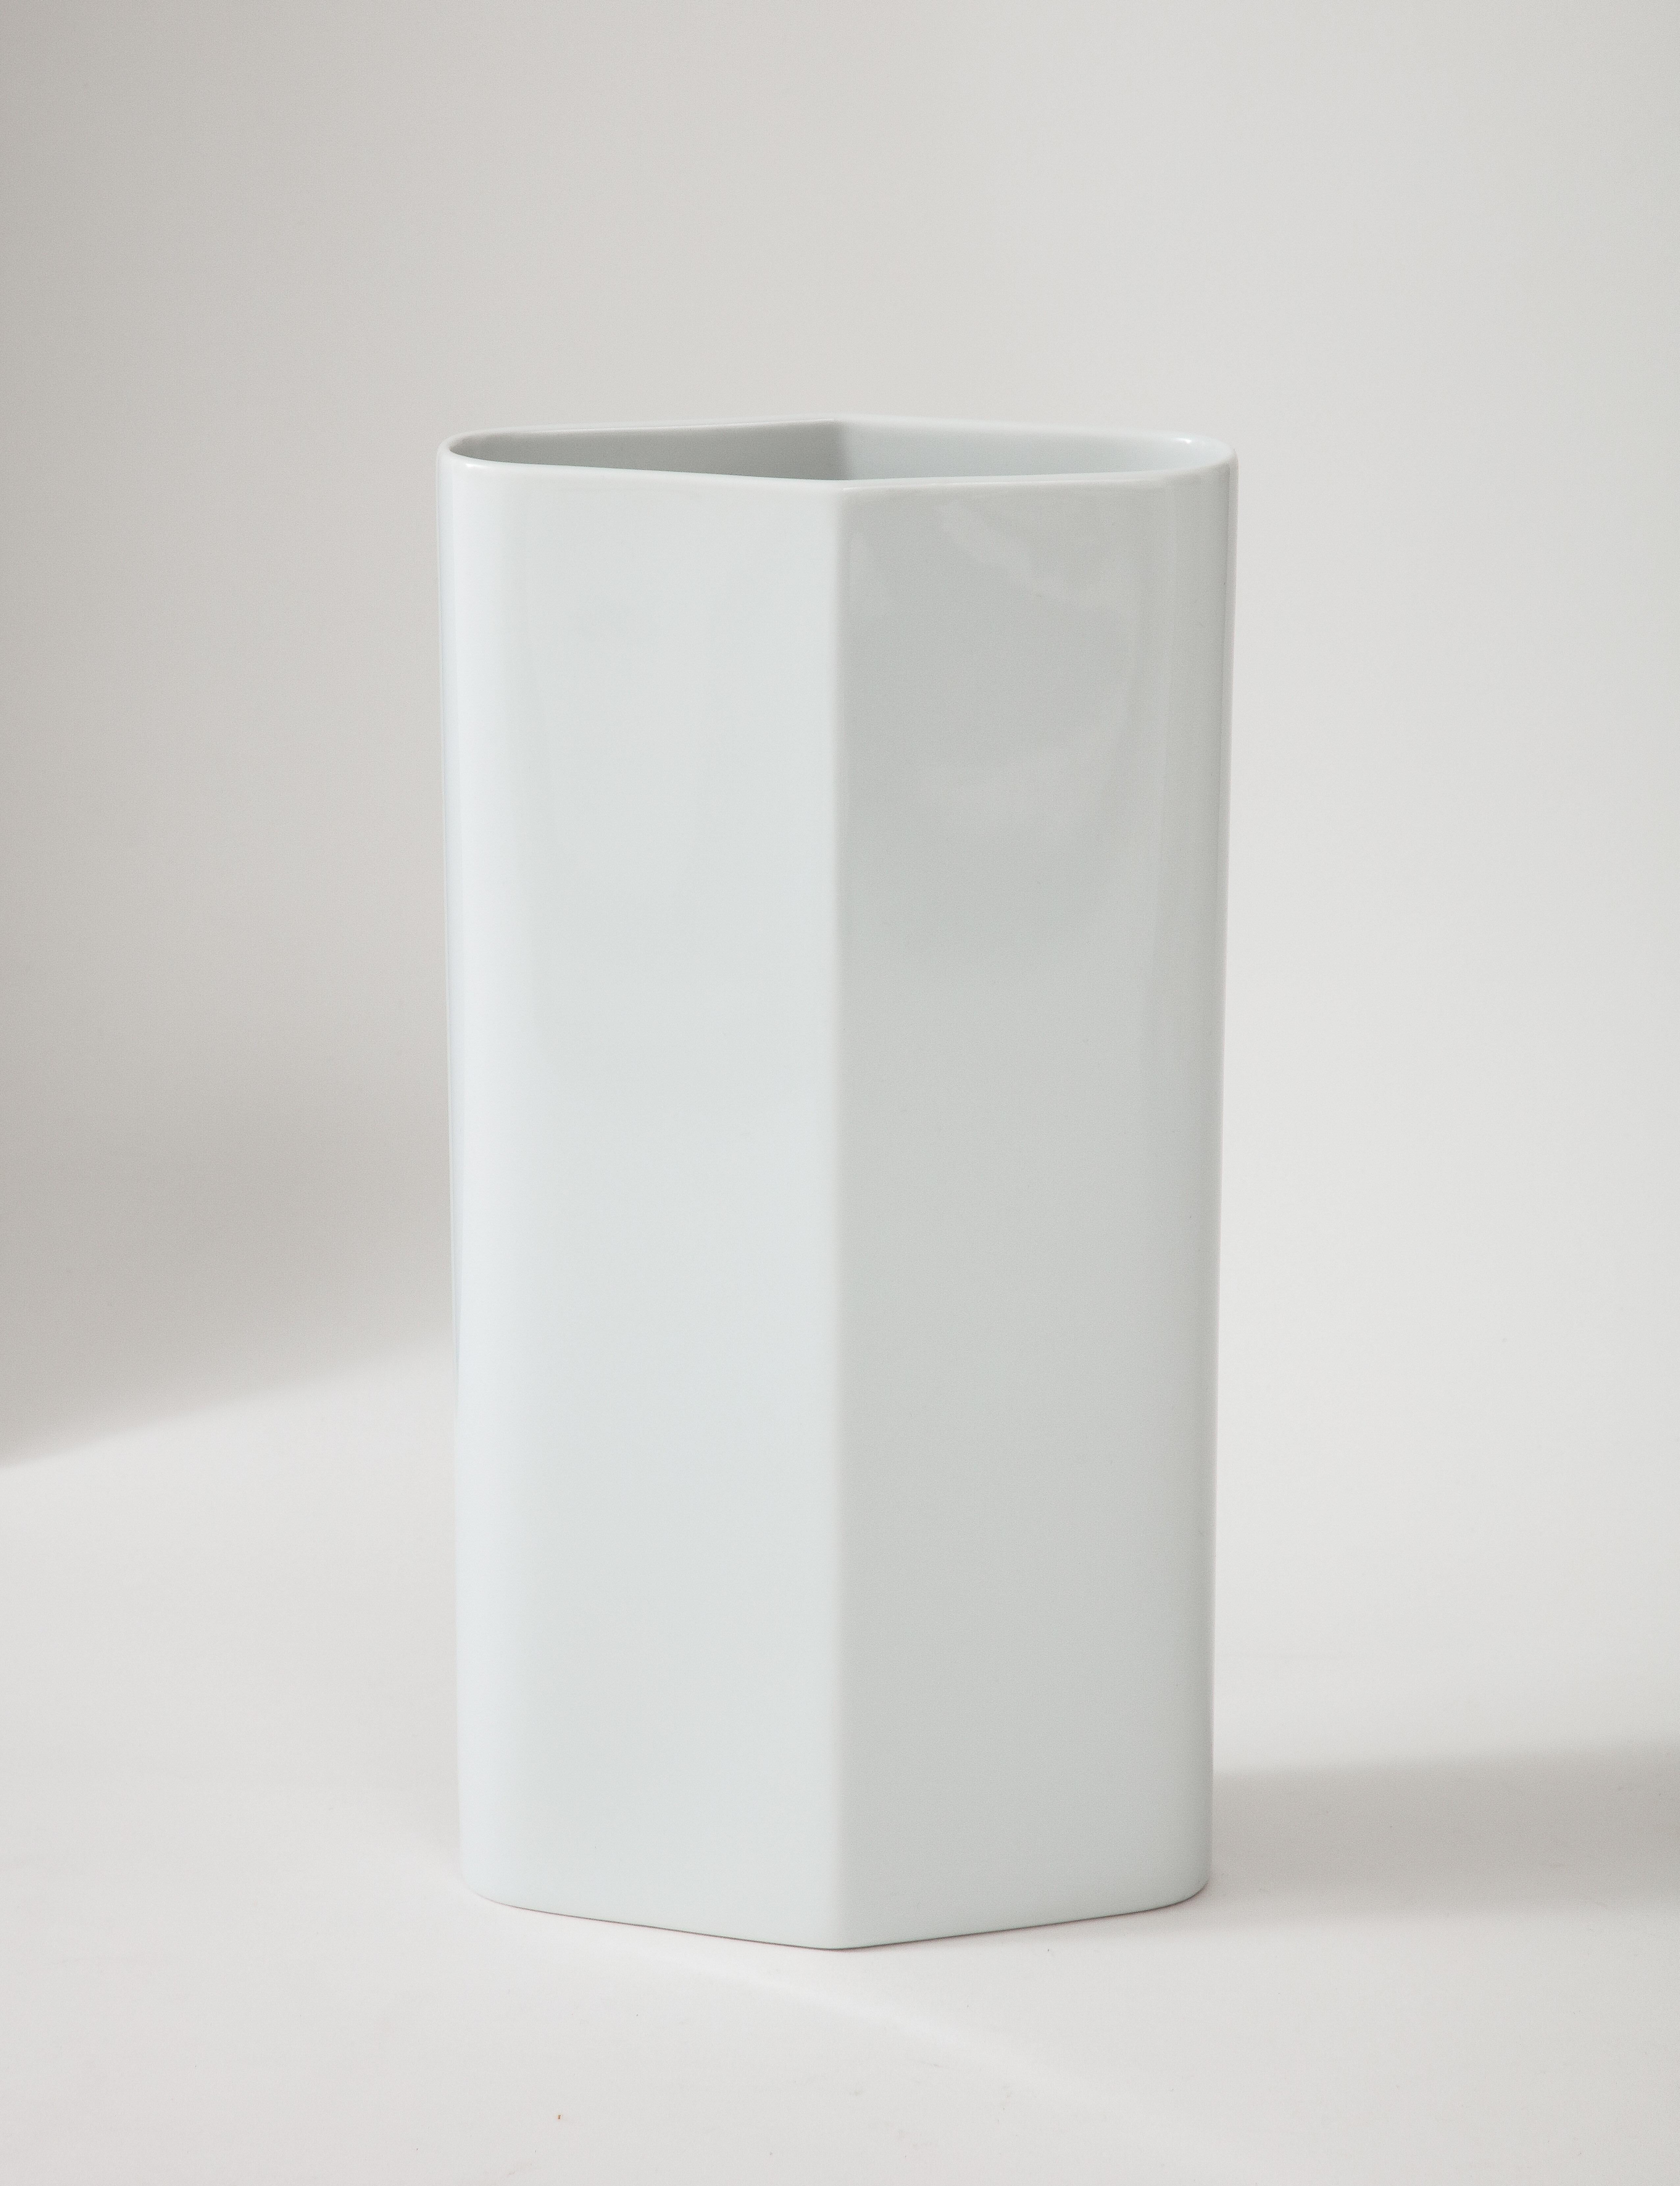 1960's Modernist Porcelain Vases Collection by Rosenthal For Sale 1